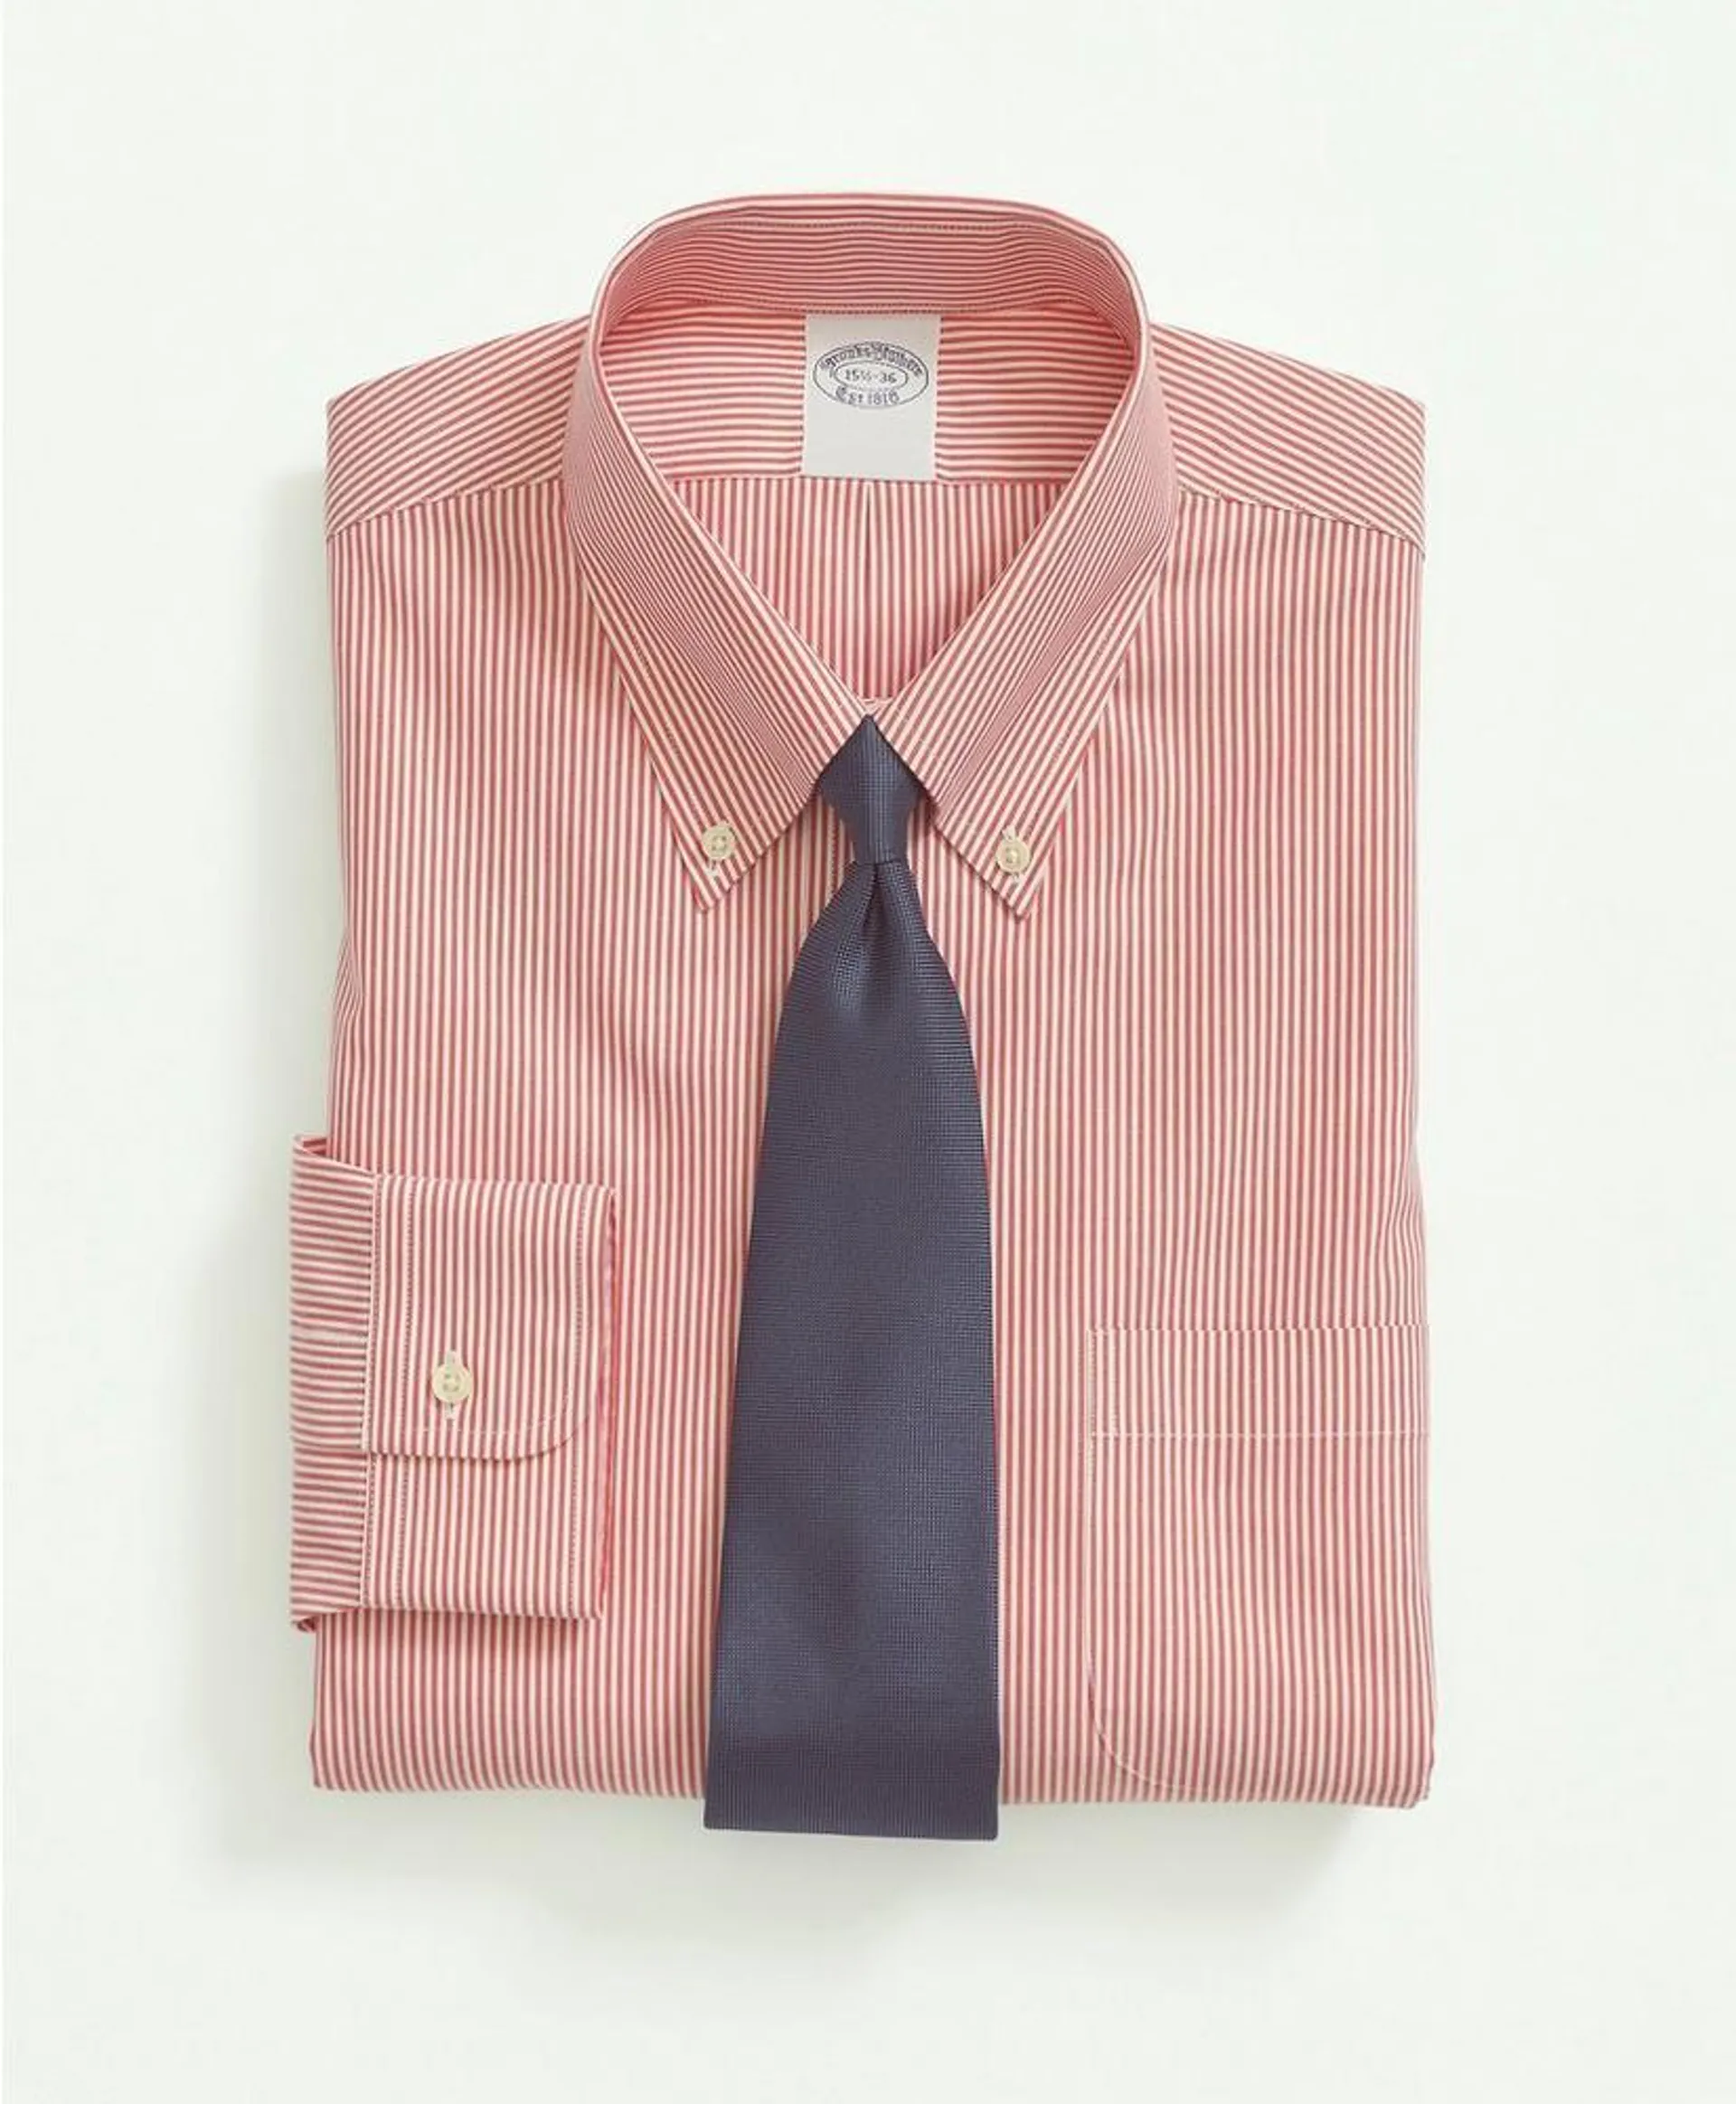 Cotton Non-Iron Pinpoint Oxford Button-Down Collar, Candy Stripe Dress Shirt